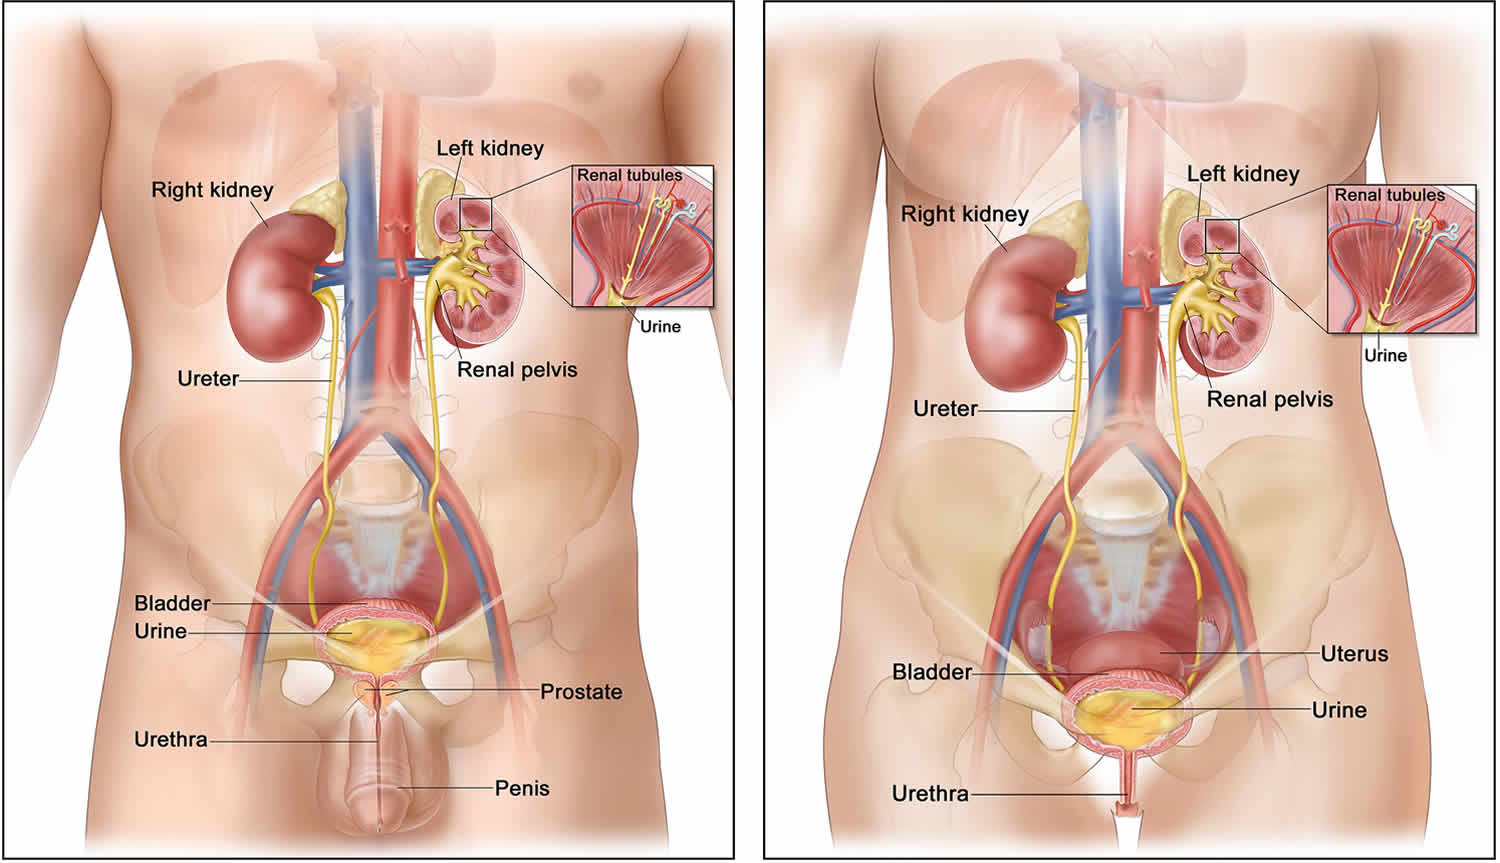 Ureter anatomy